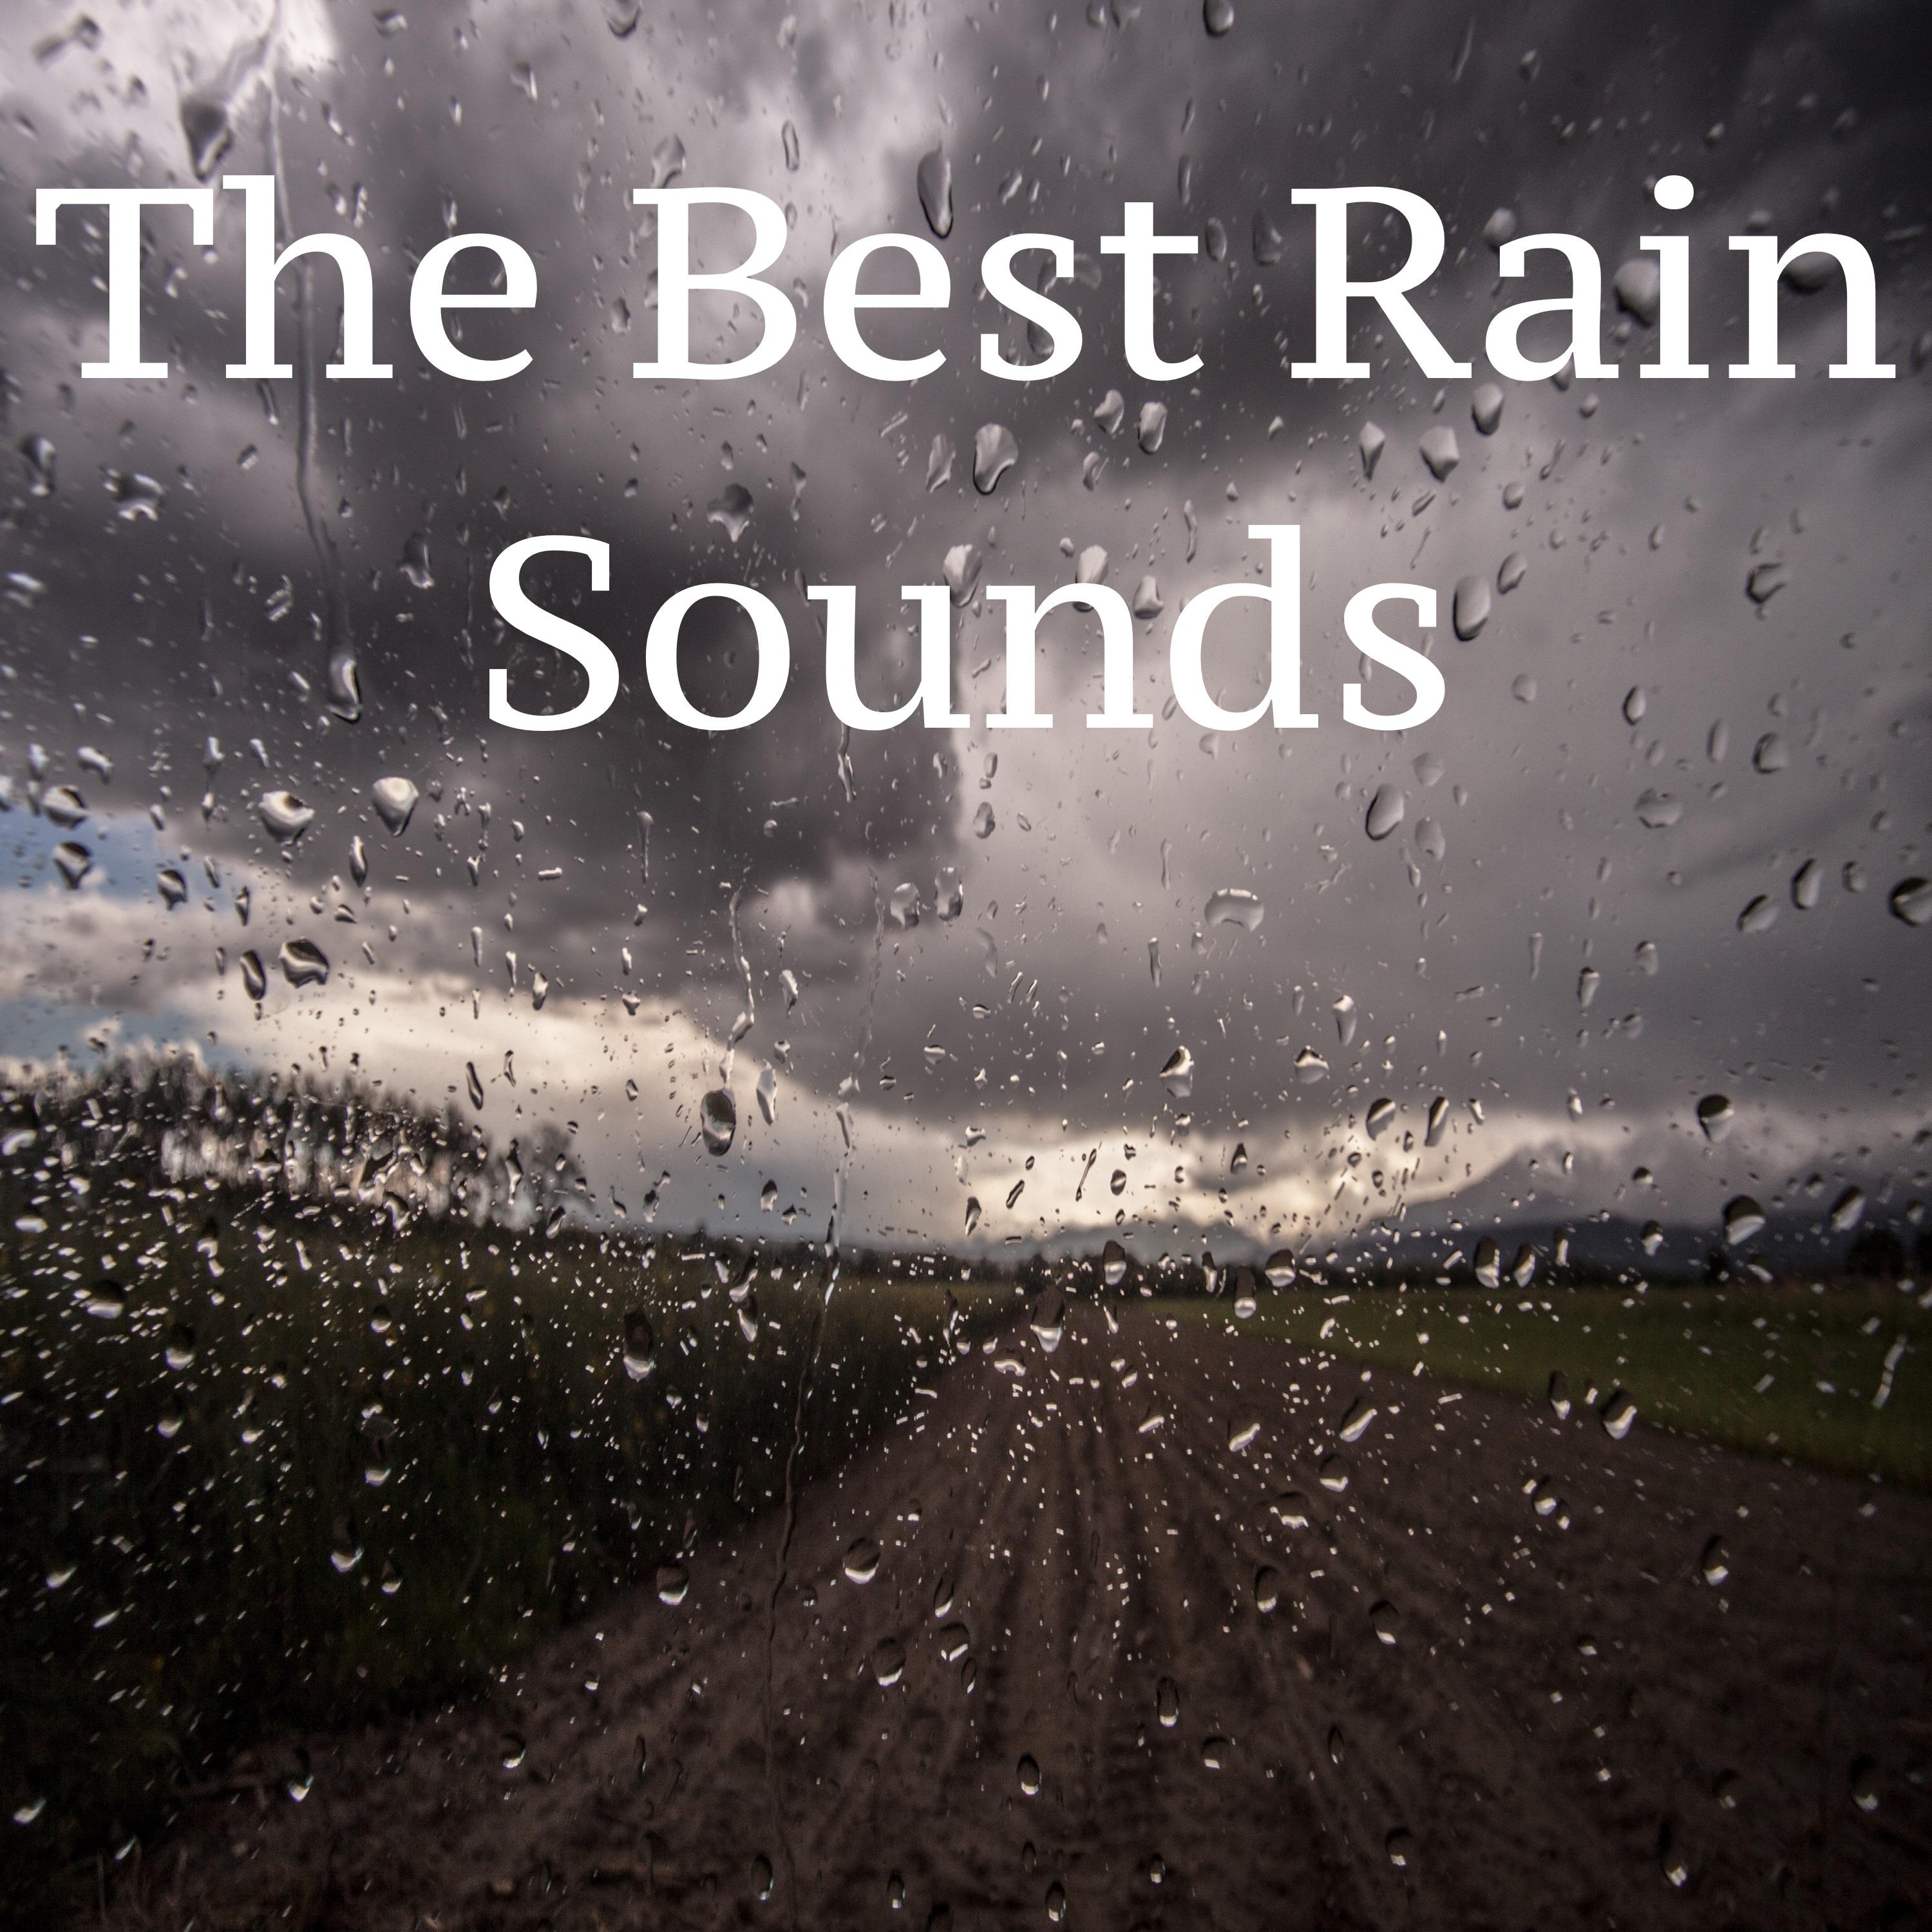 Rain Sounds to Sleep By, Rain Sounds for Study, 1 Hour Rain Sounds, Rain Sounds to go to Sleep Compilation